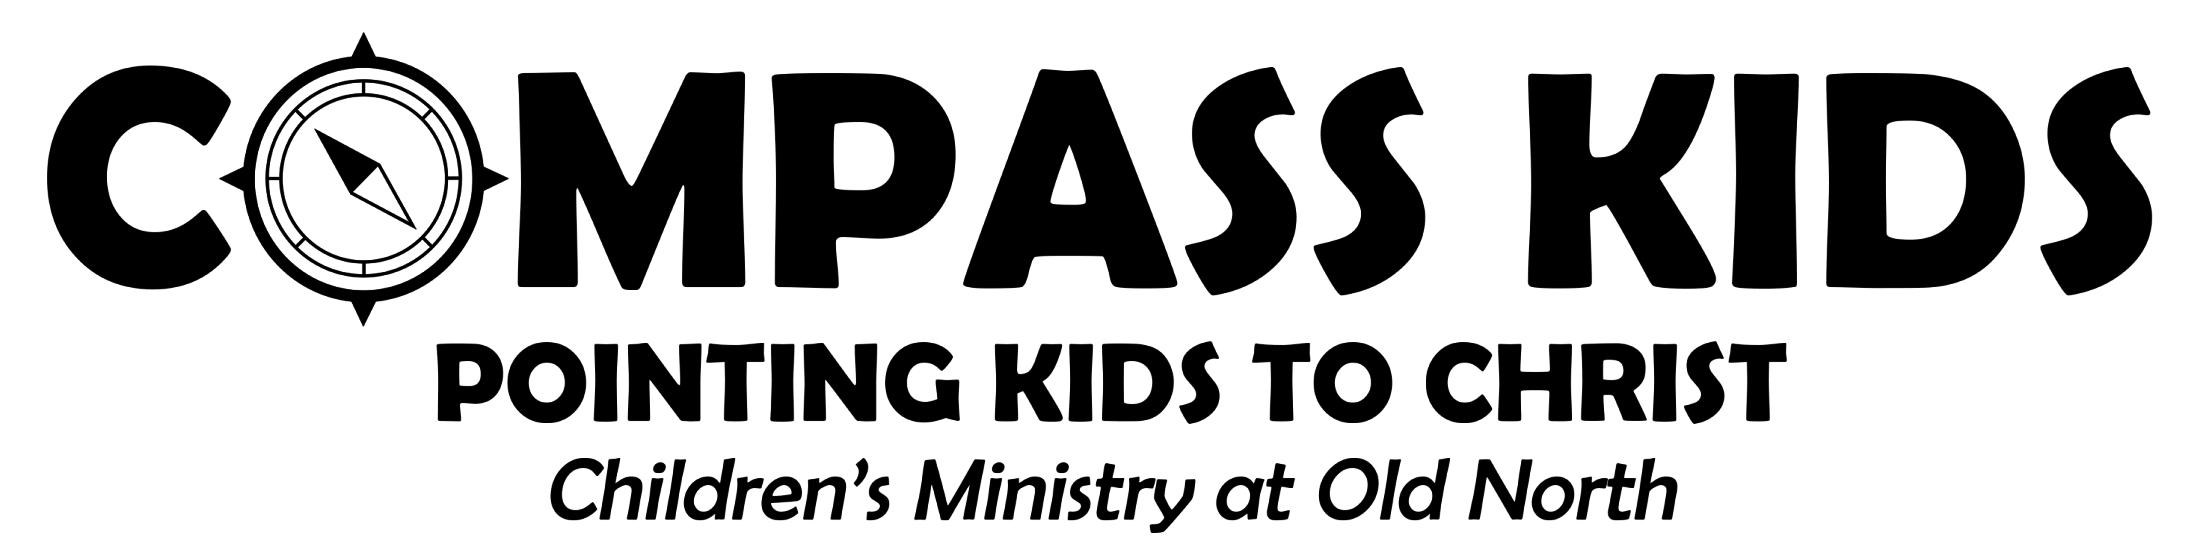 Compass Kids Logo_Black